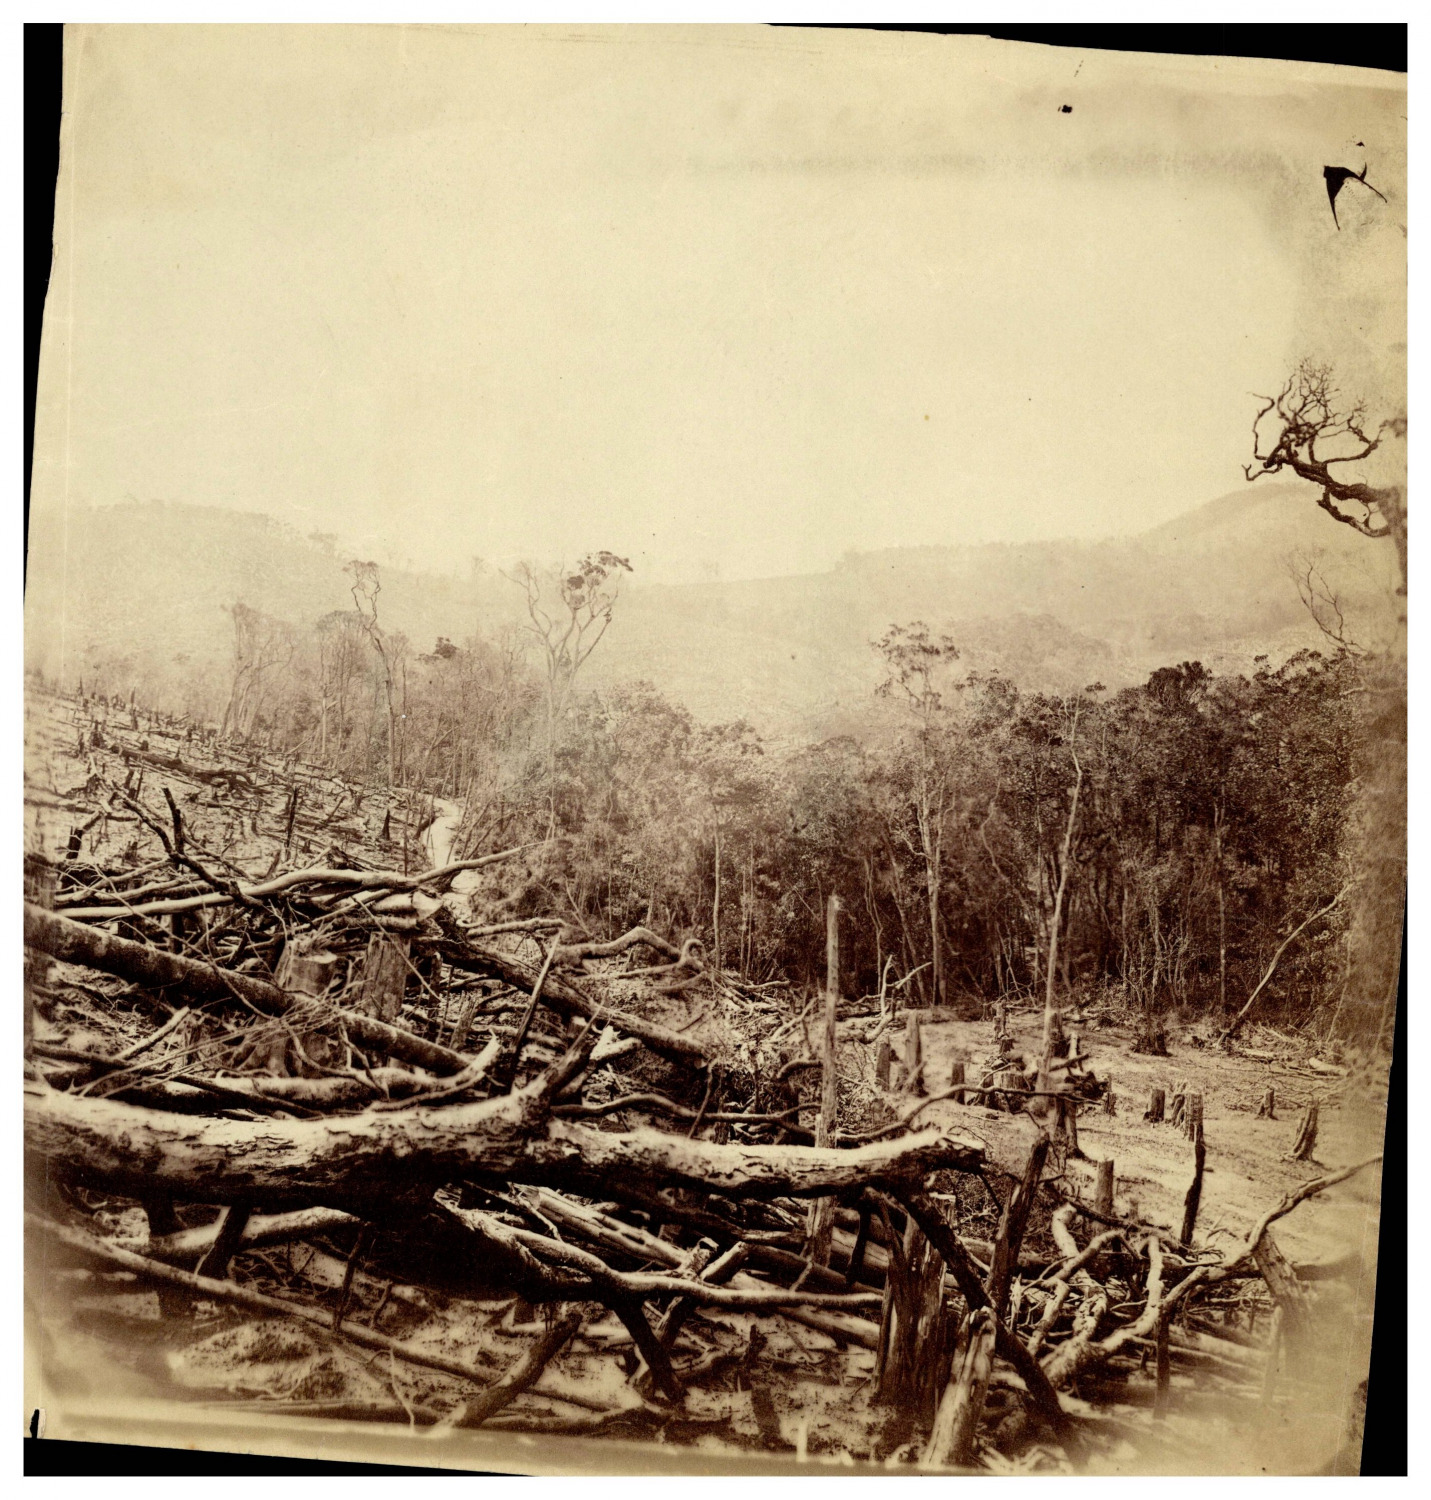 Ceylon, Maturata, Deforestation for Coffee Plantation Vintage Print.  